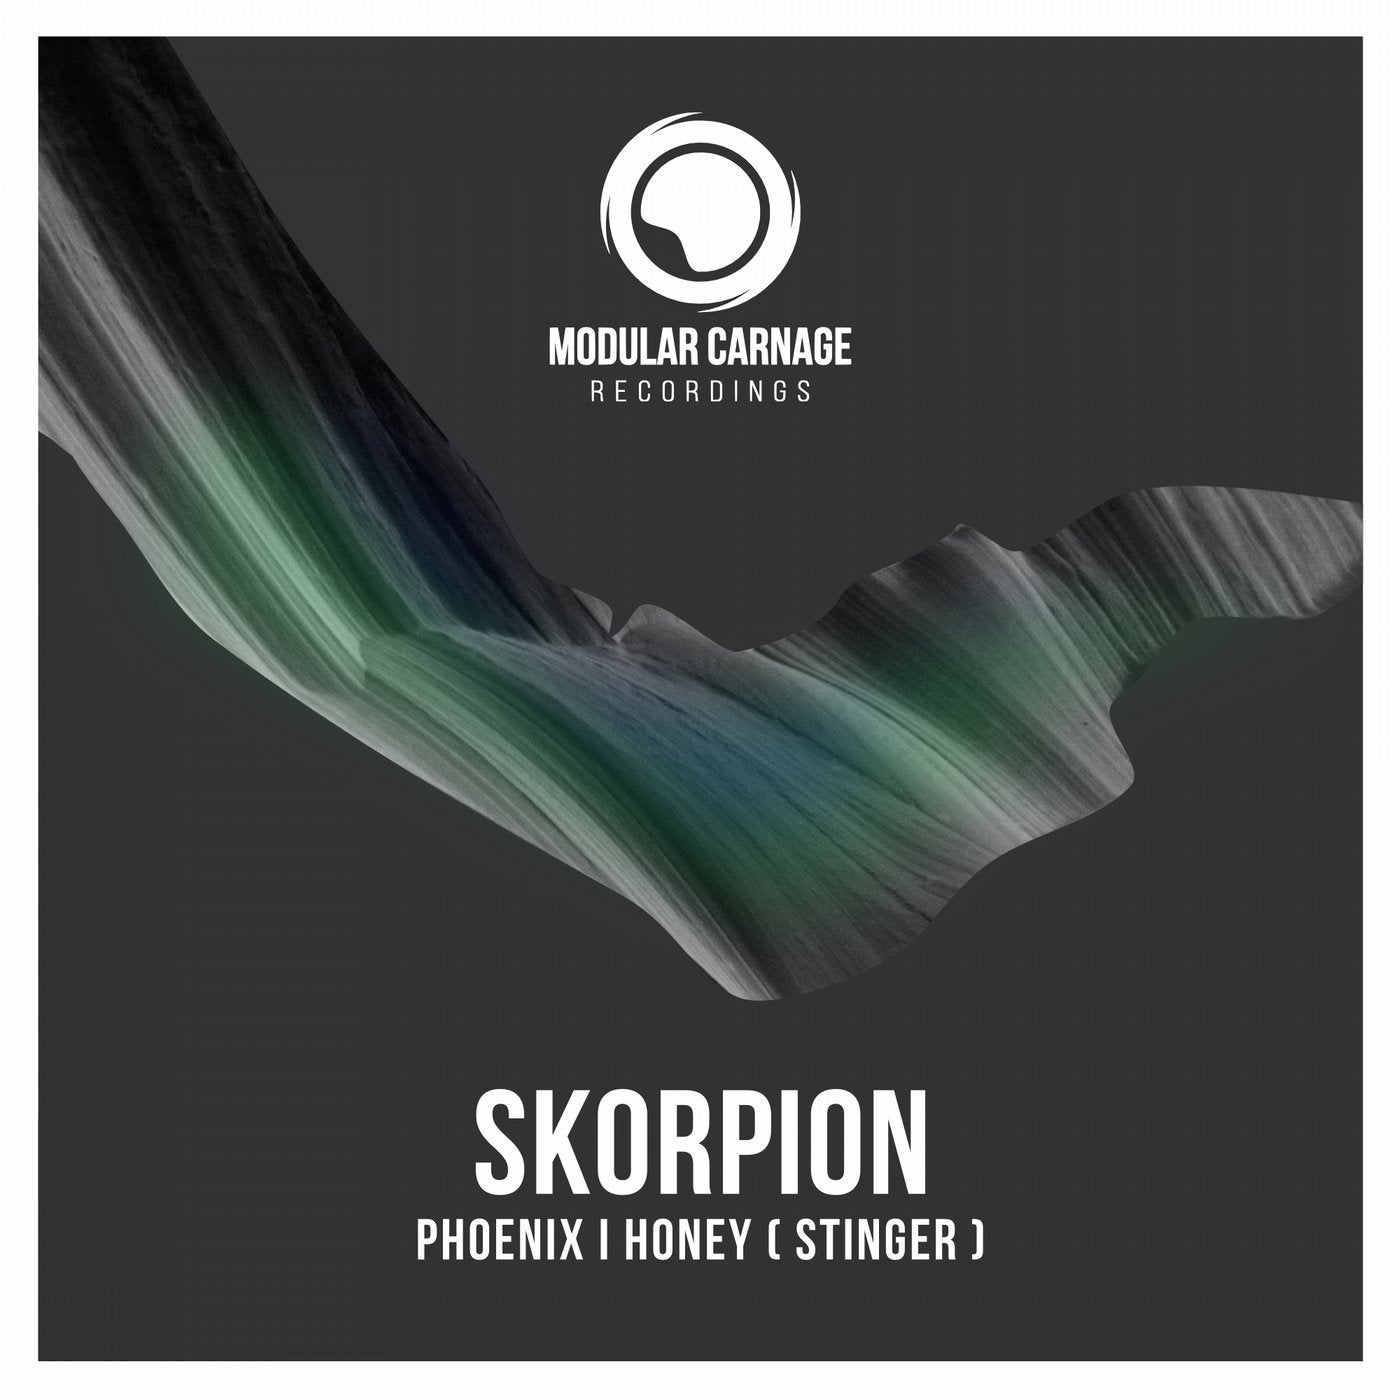 Phoenix / Honey (Stinger)